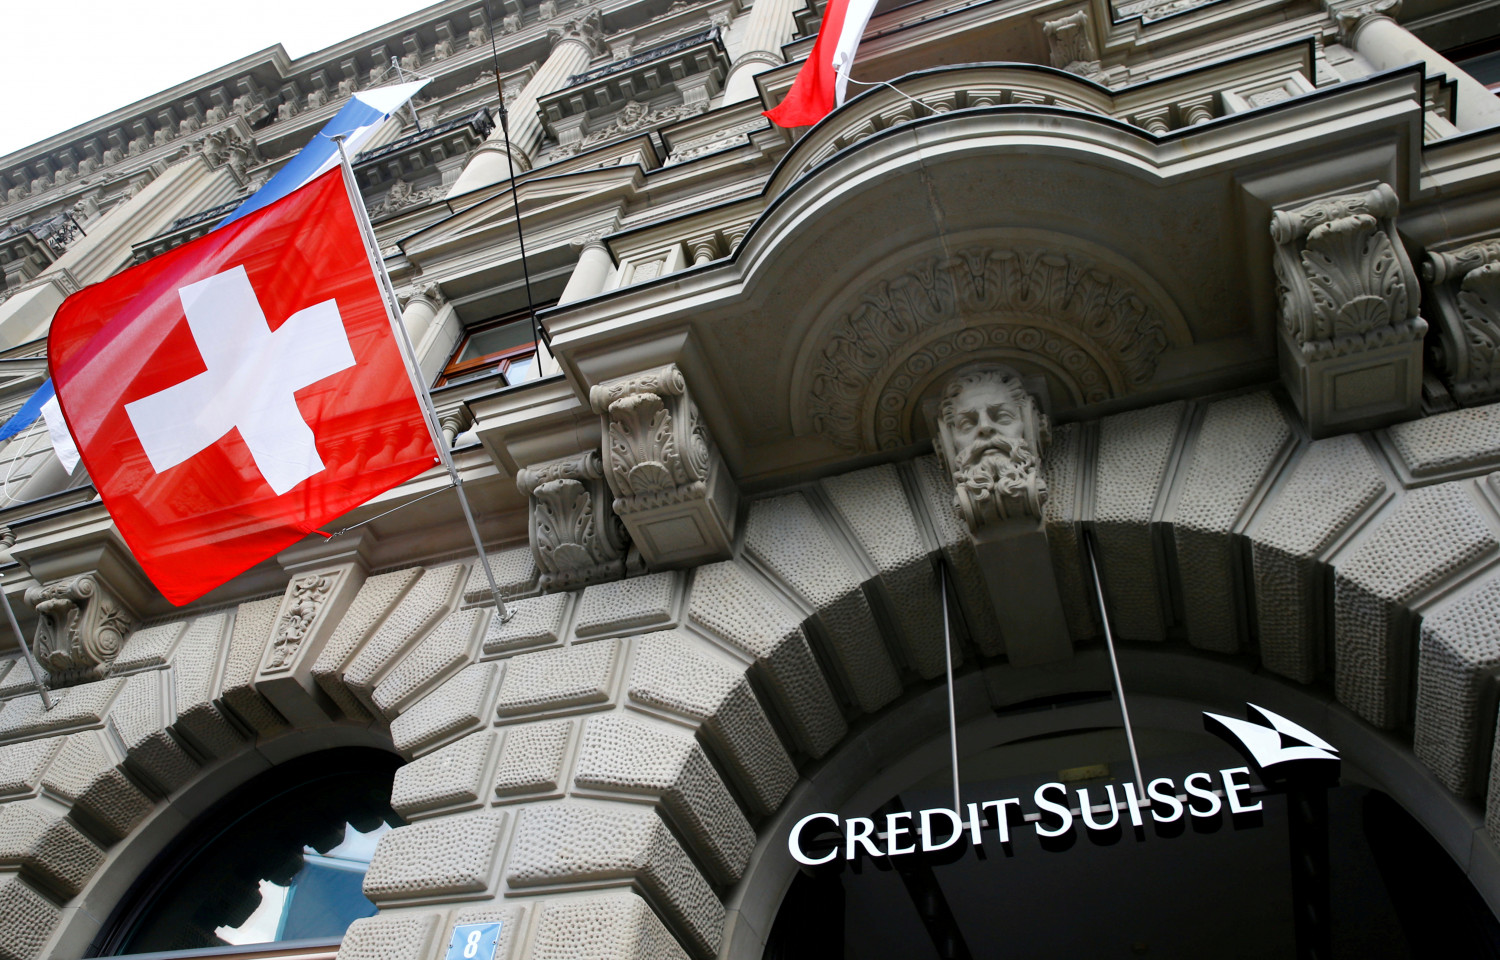 credit suisse compte recuperer un pret de 140 millions de dollars a greensill 